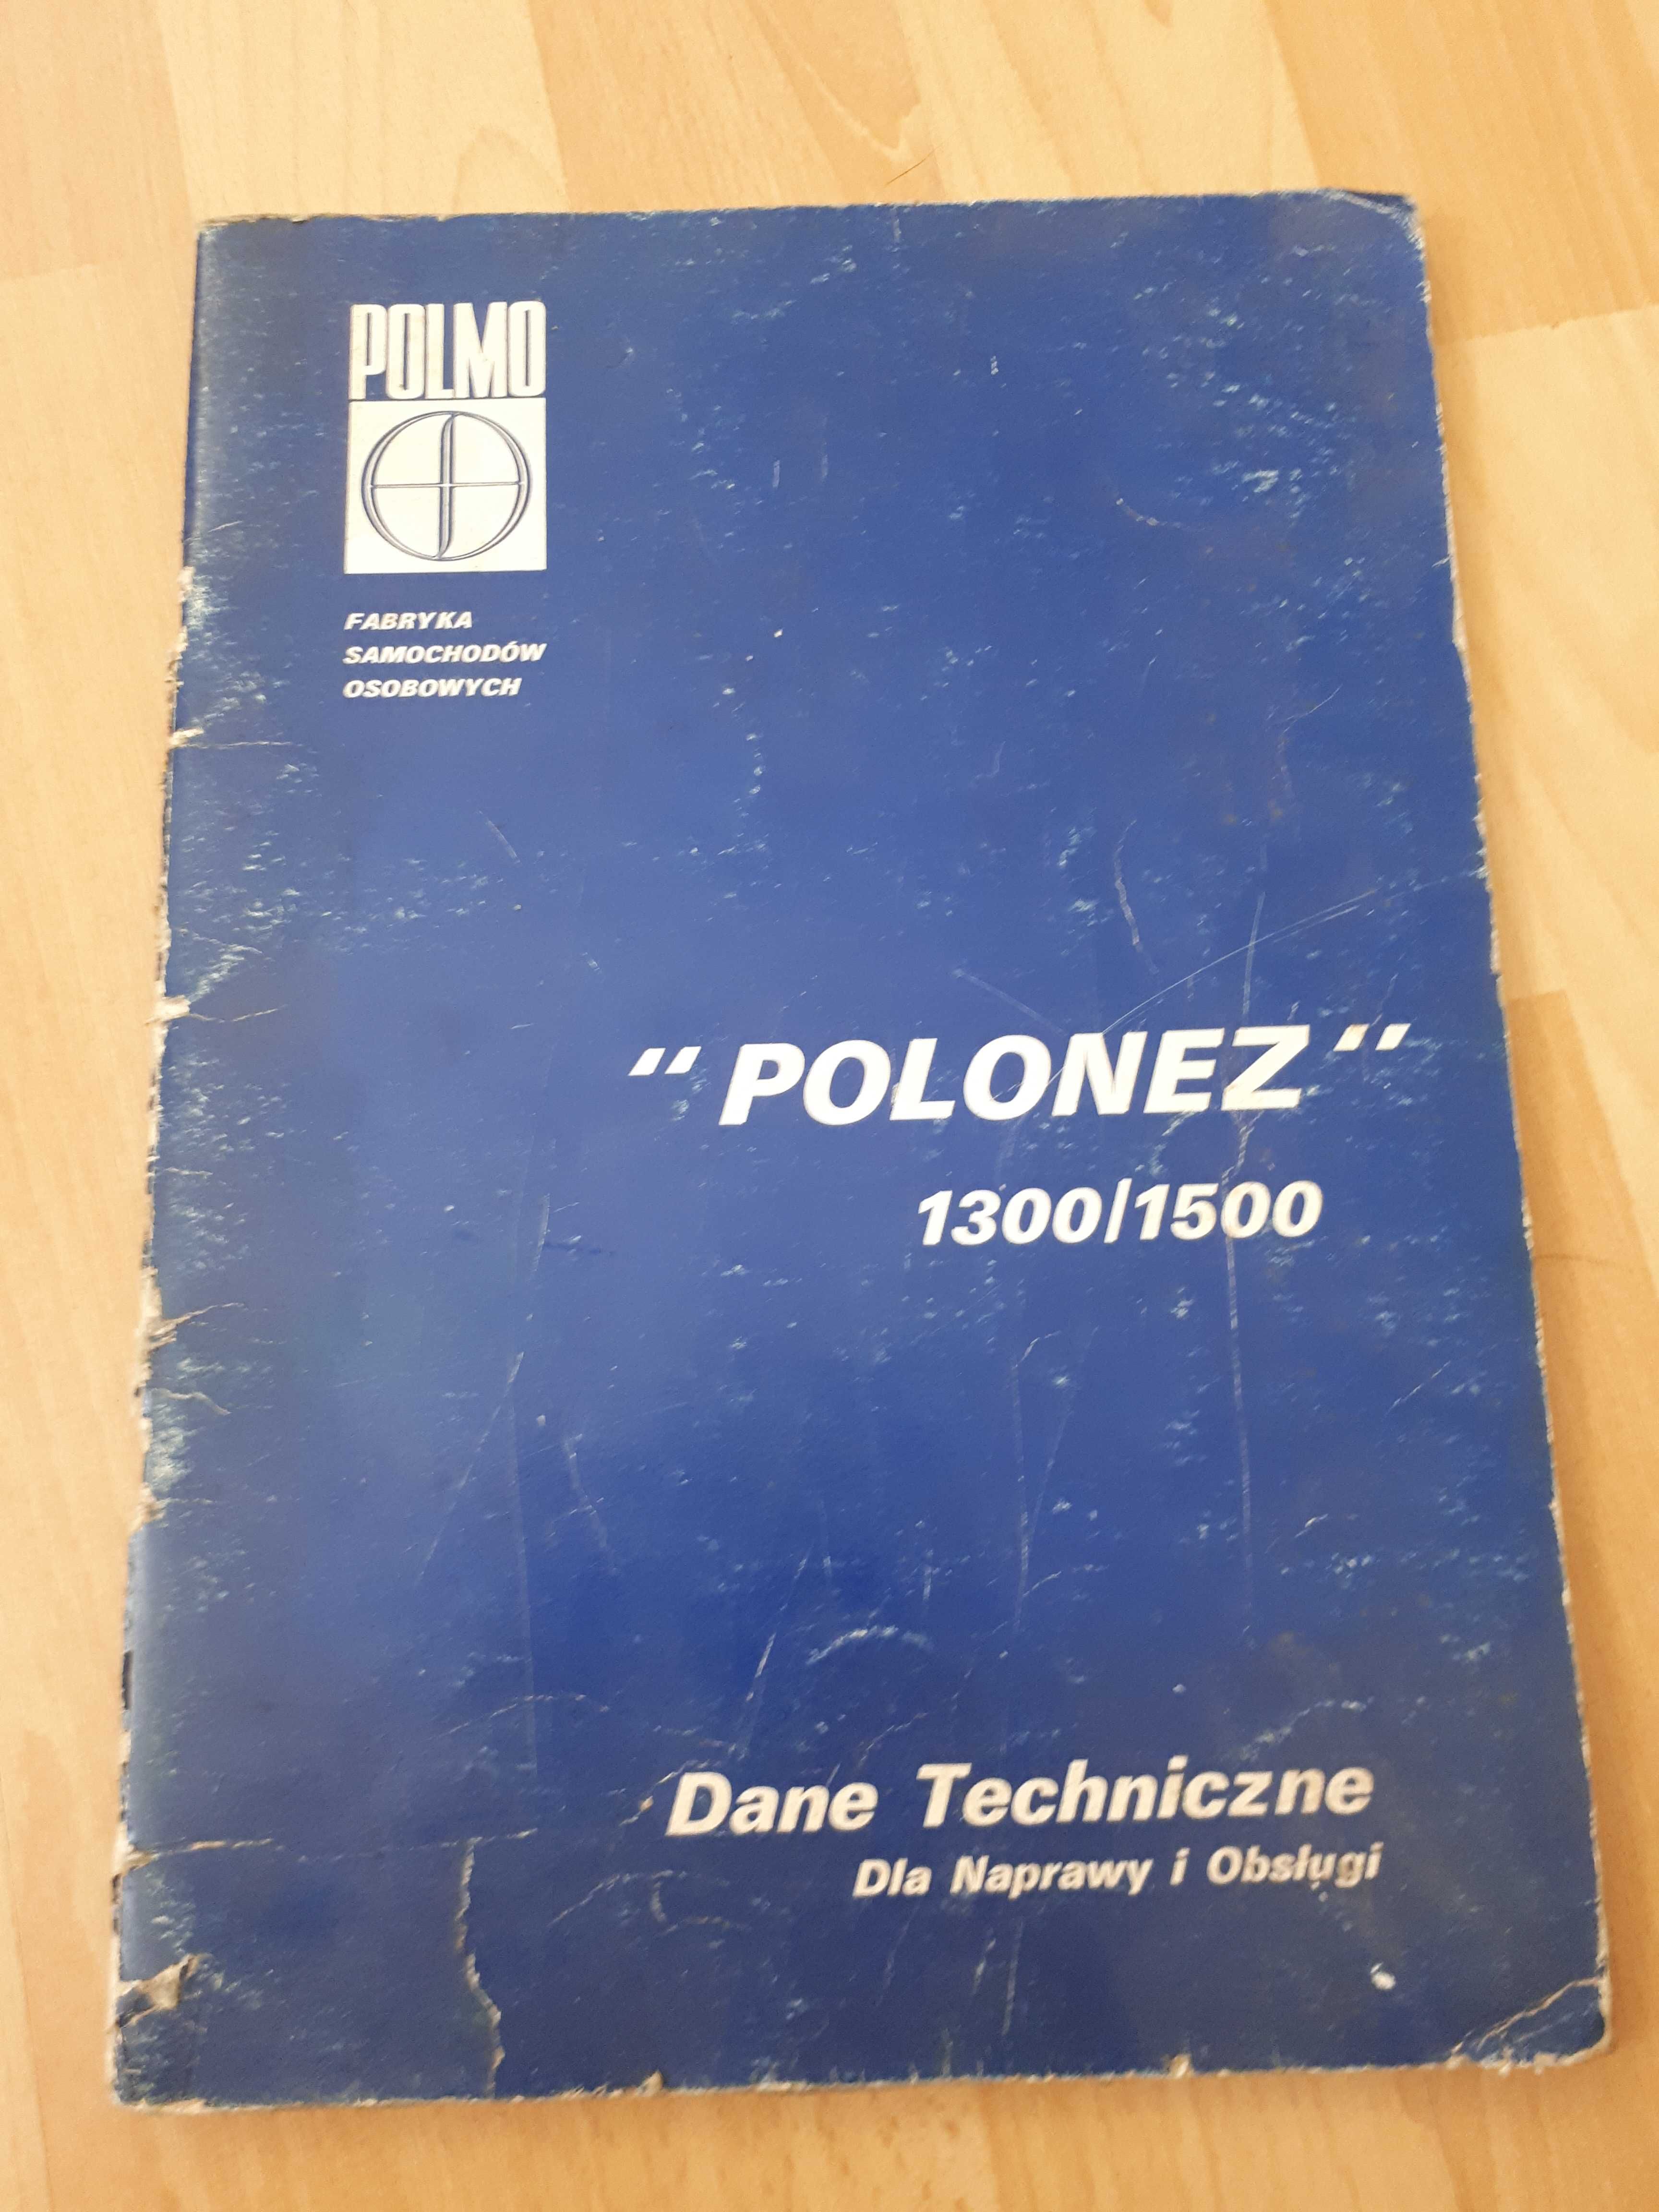 Polonez 1300/1500 3D, Coupe, dane techniczne